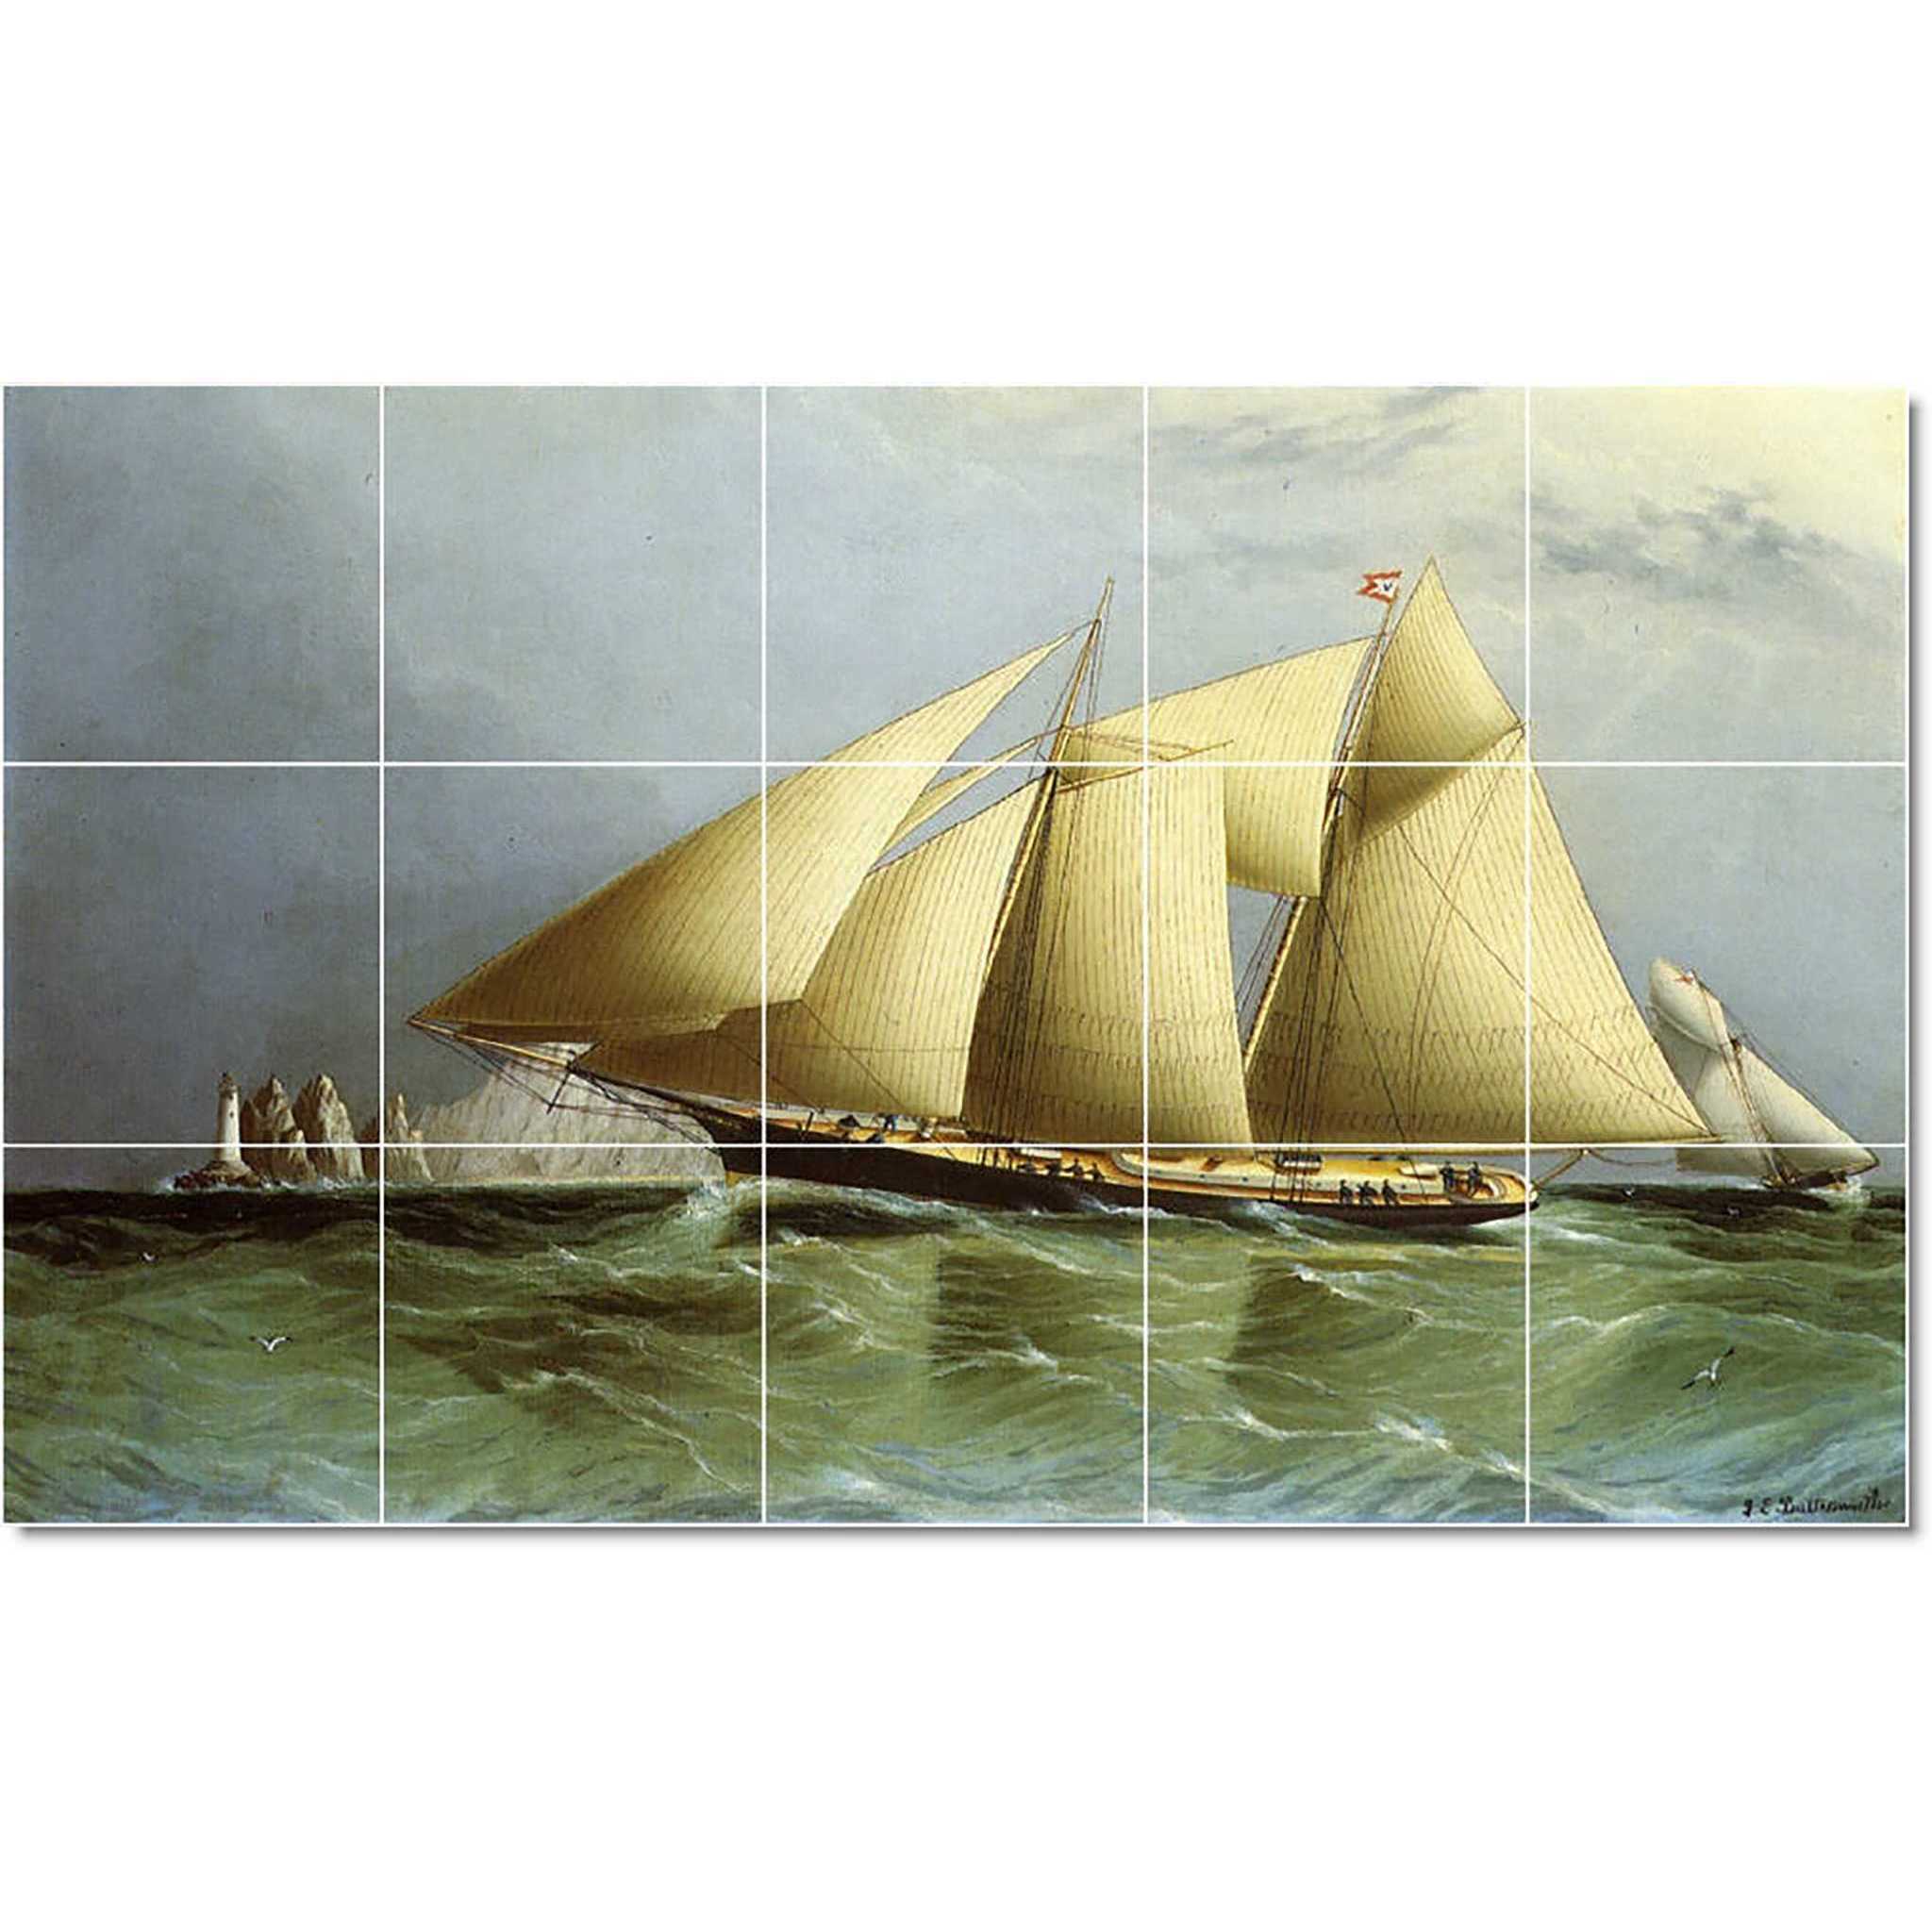 james buttersworth boat ship painting ceramic tile mural p22196